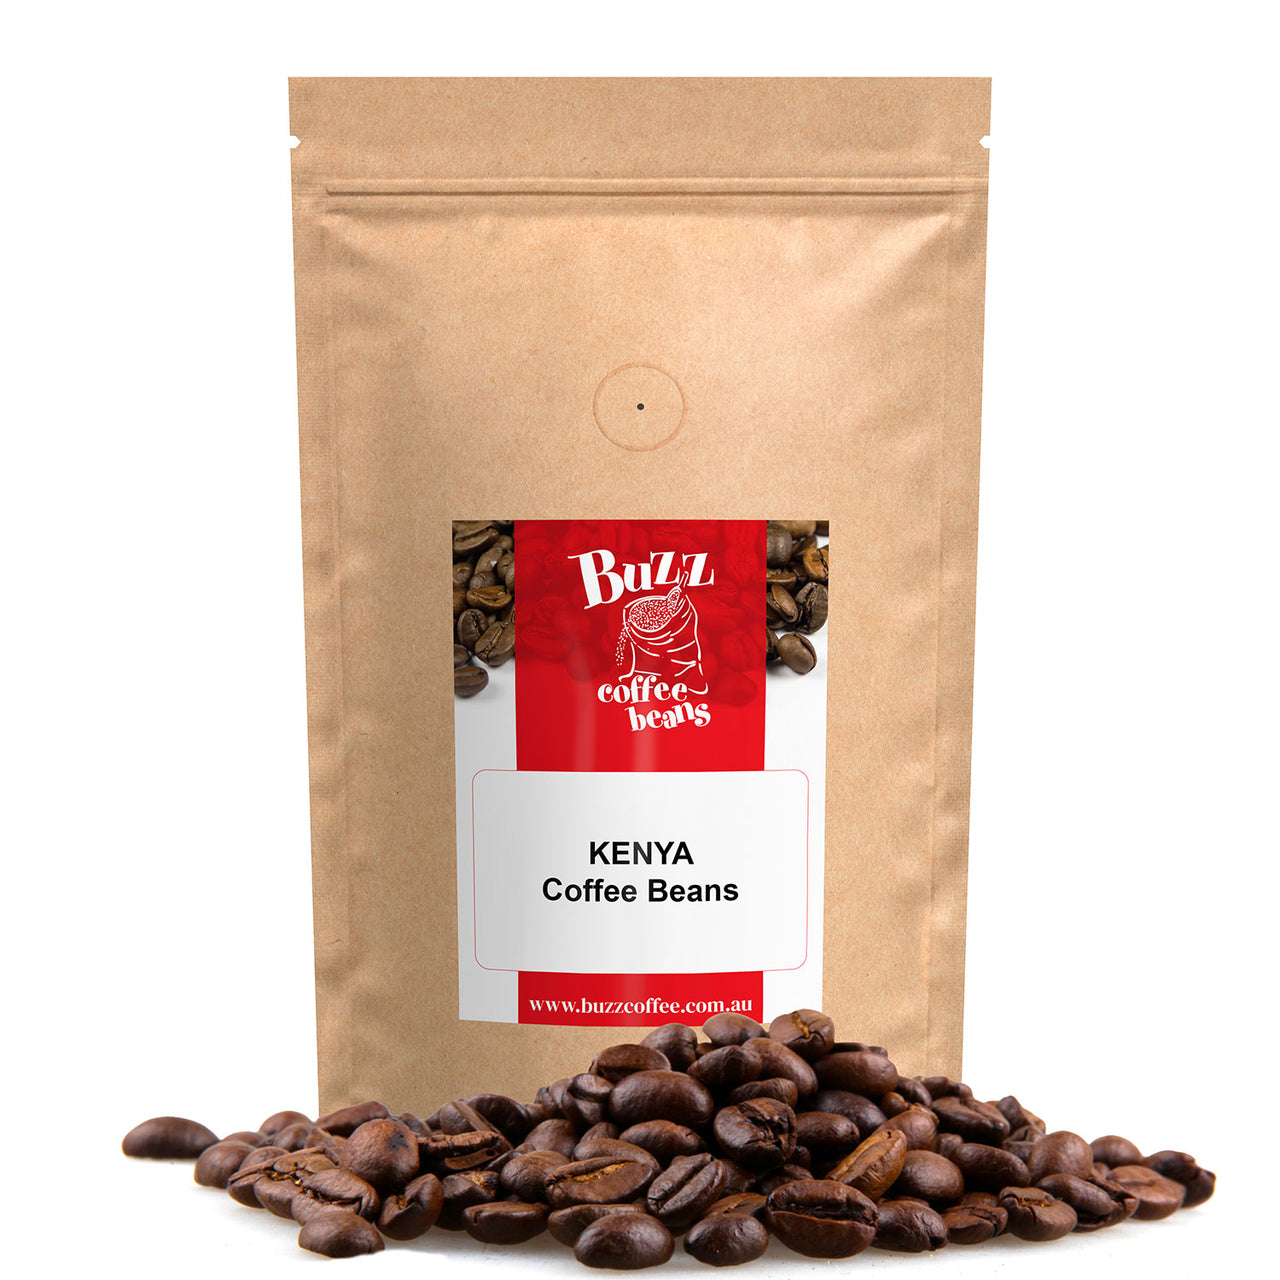 Kenya Coffee beans